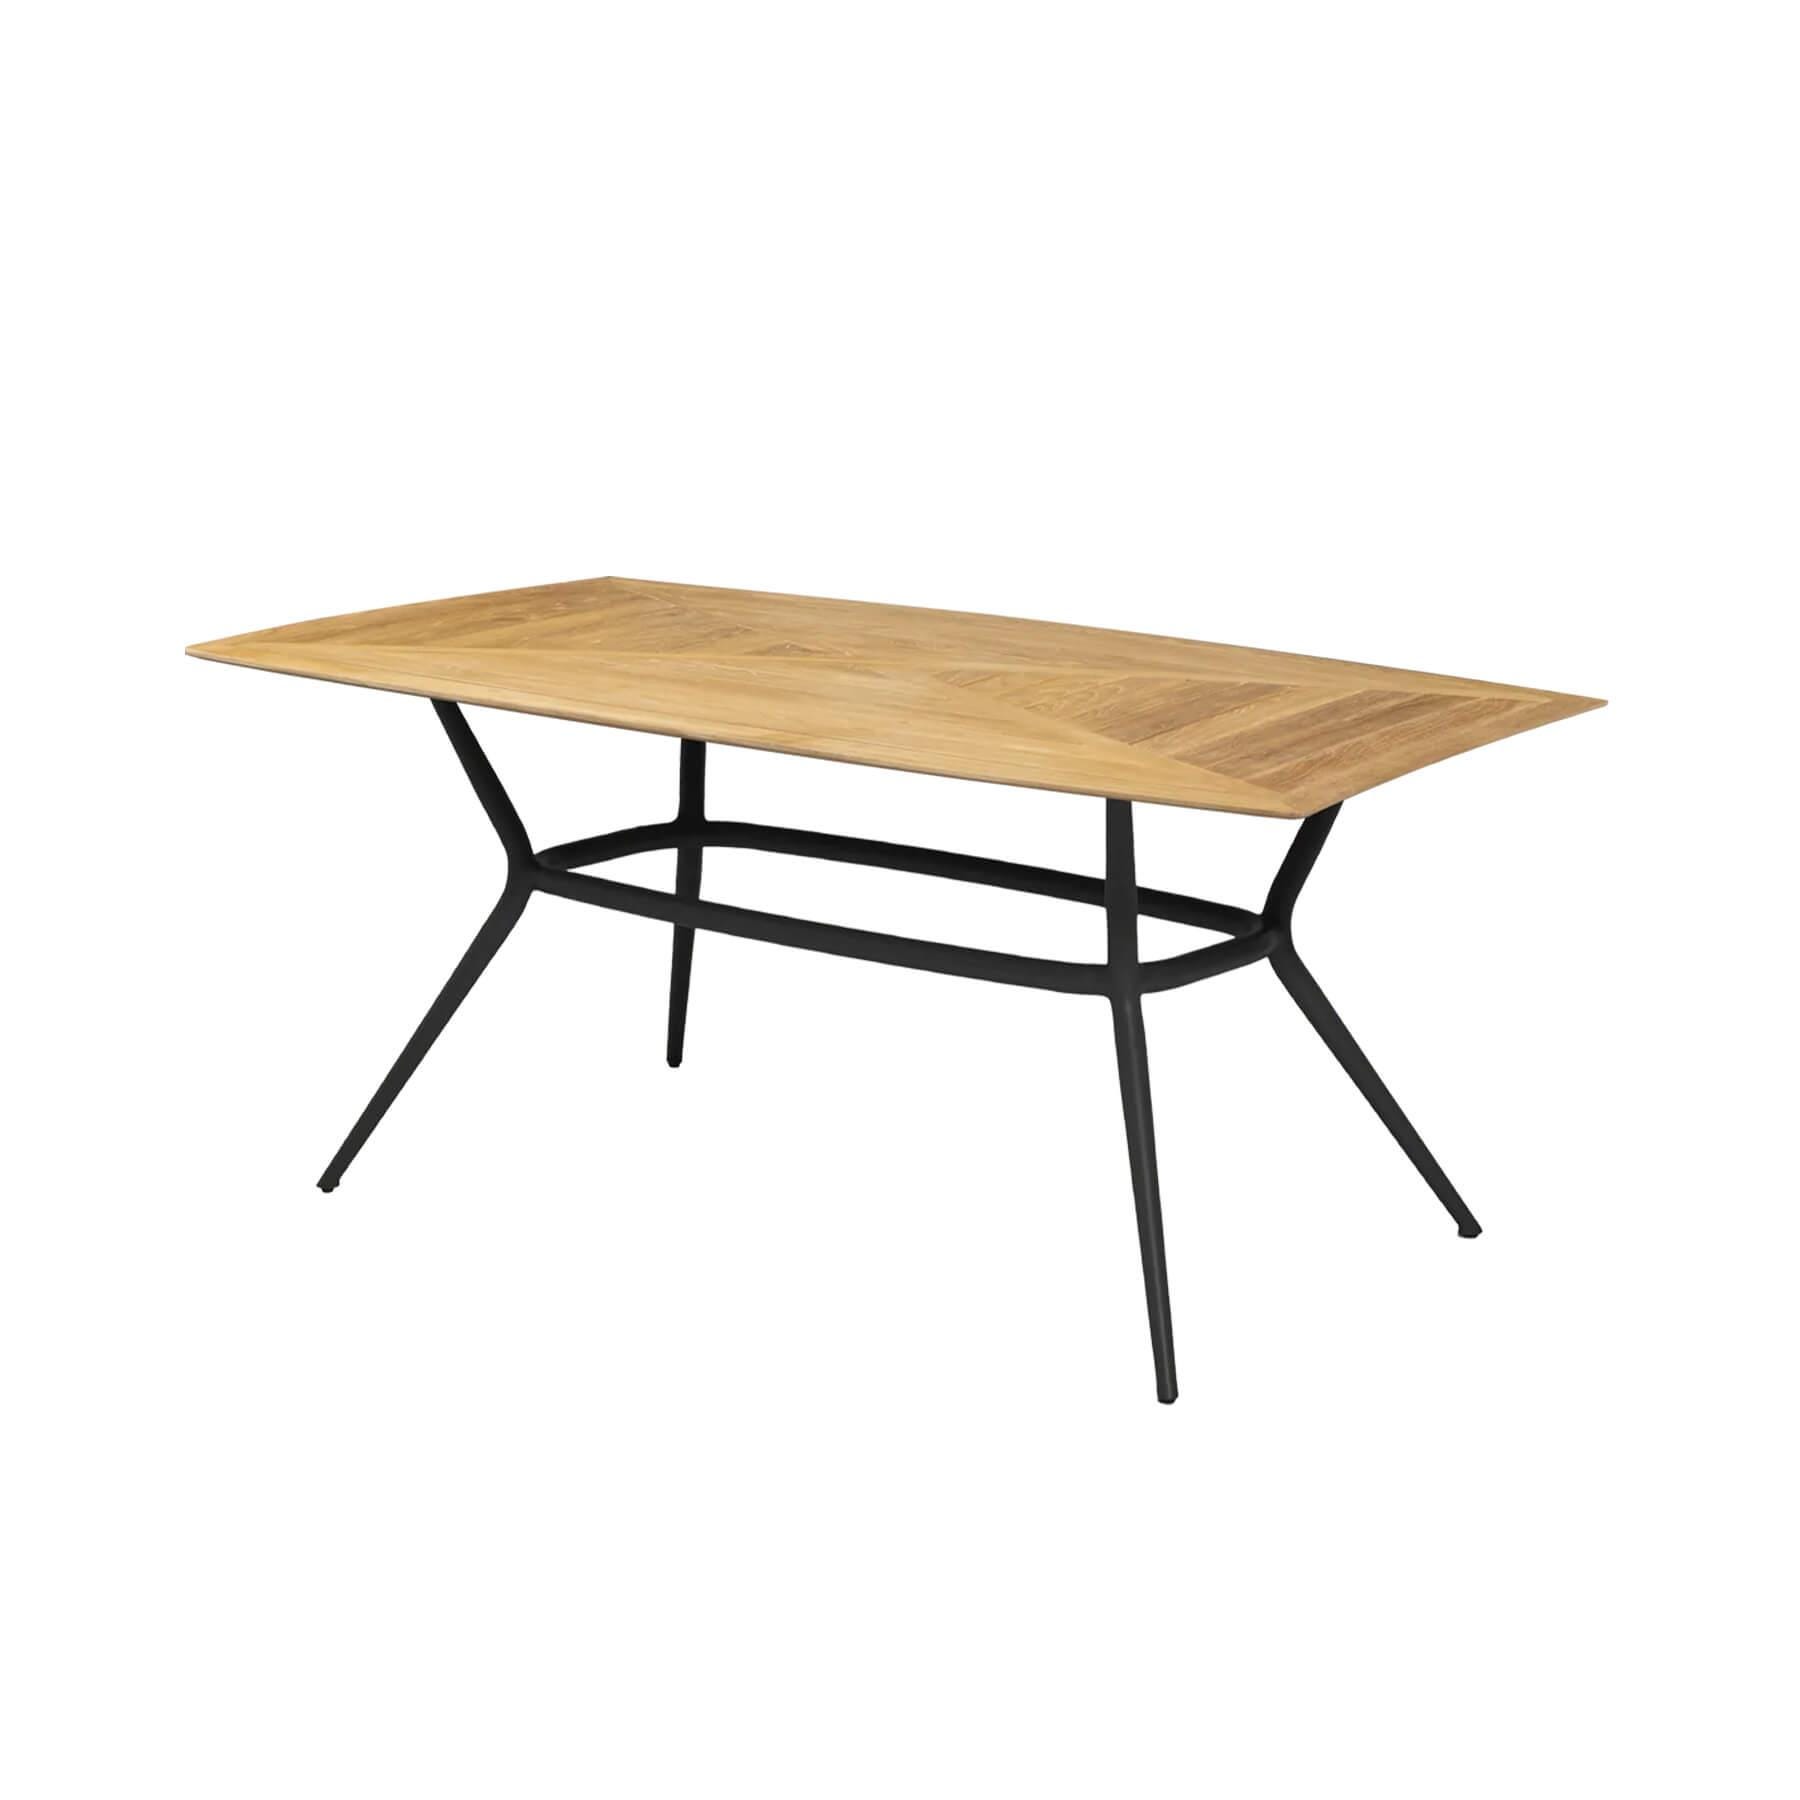 Caneline Joy Outdoor Dining Table Rectangular Teak Top Lava Grey Legs Light Wood